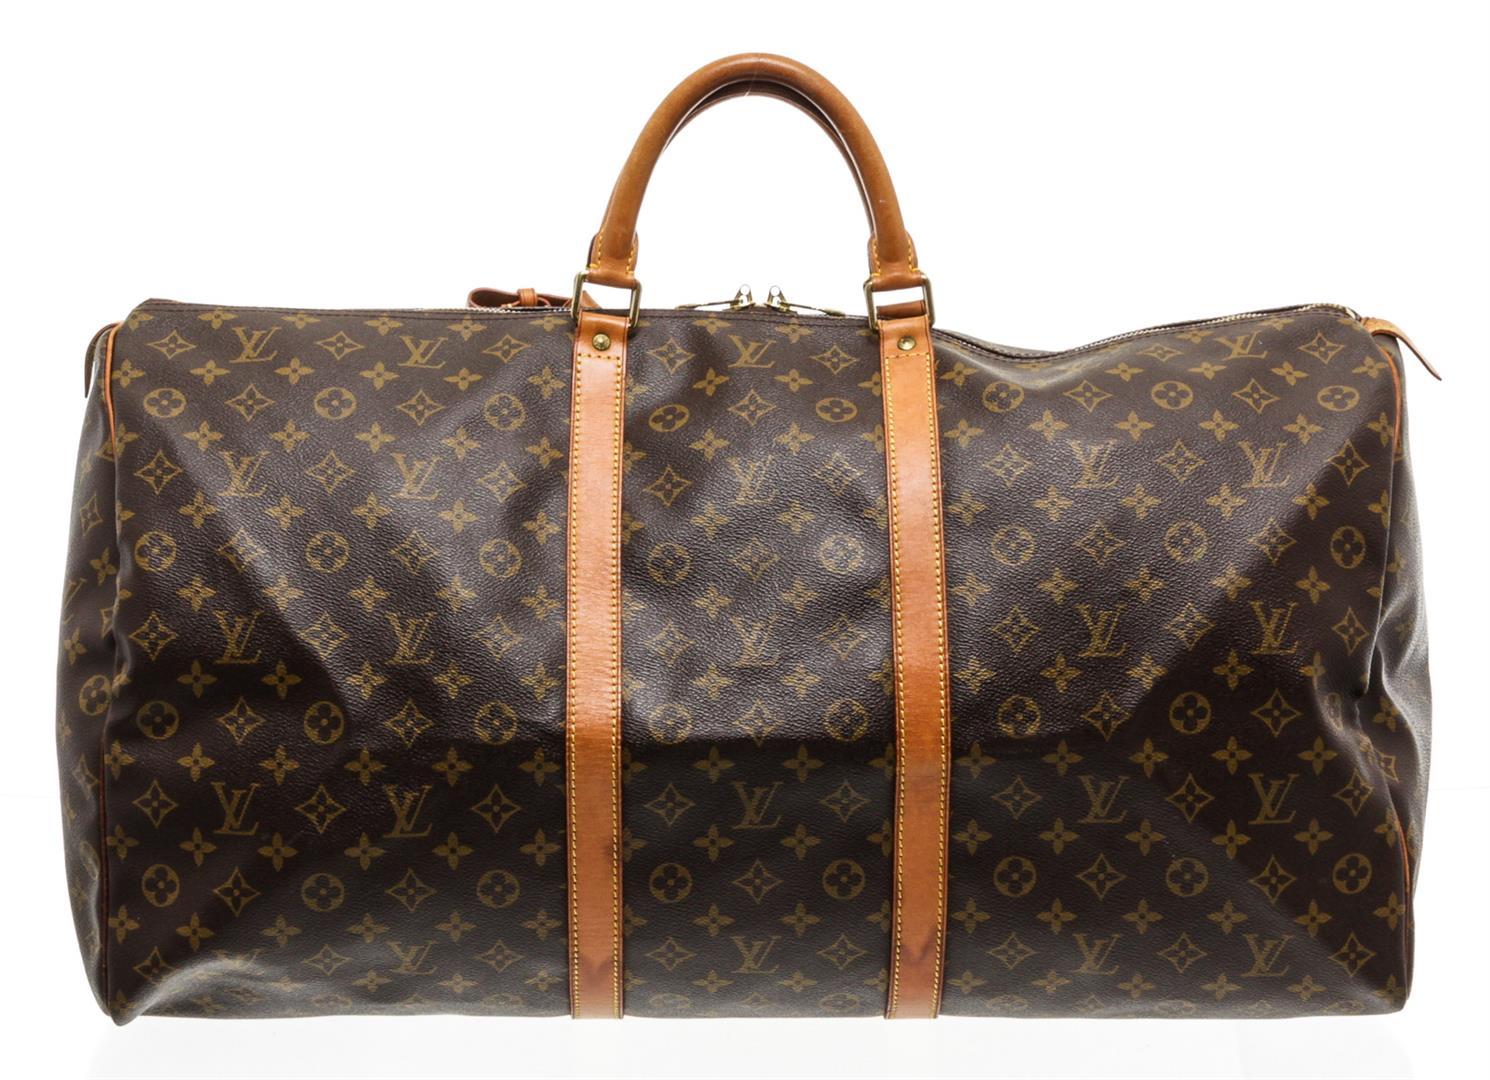 Louis Vuitton Monogram Canvas Leather Keepall 55 cm Duffle Bag Luggage